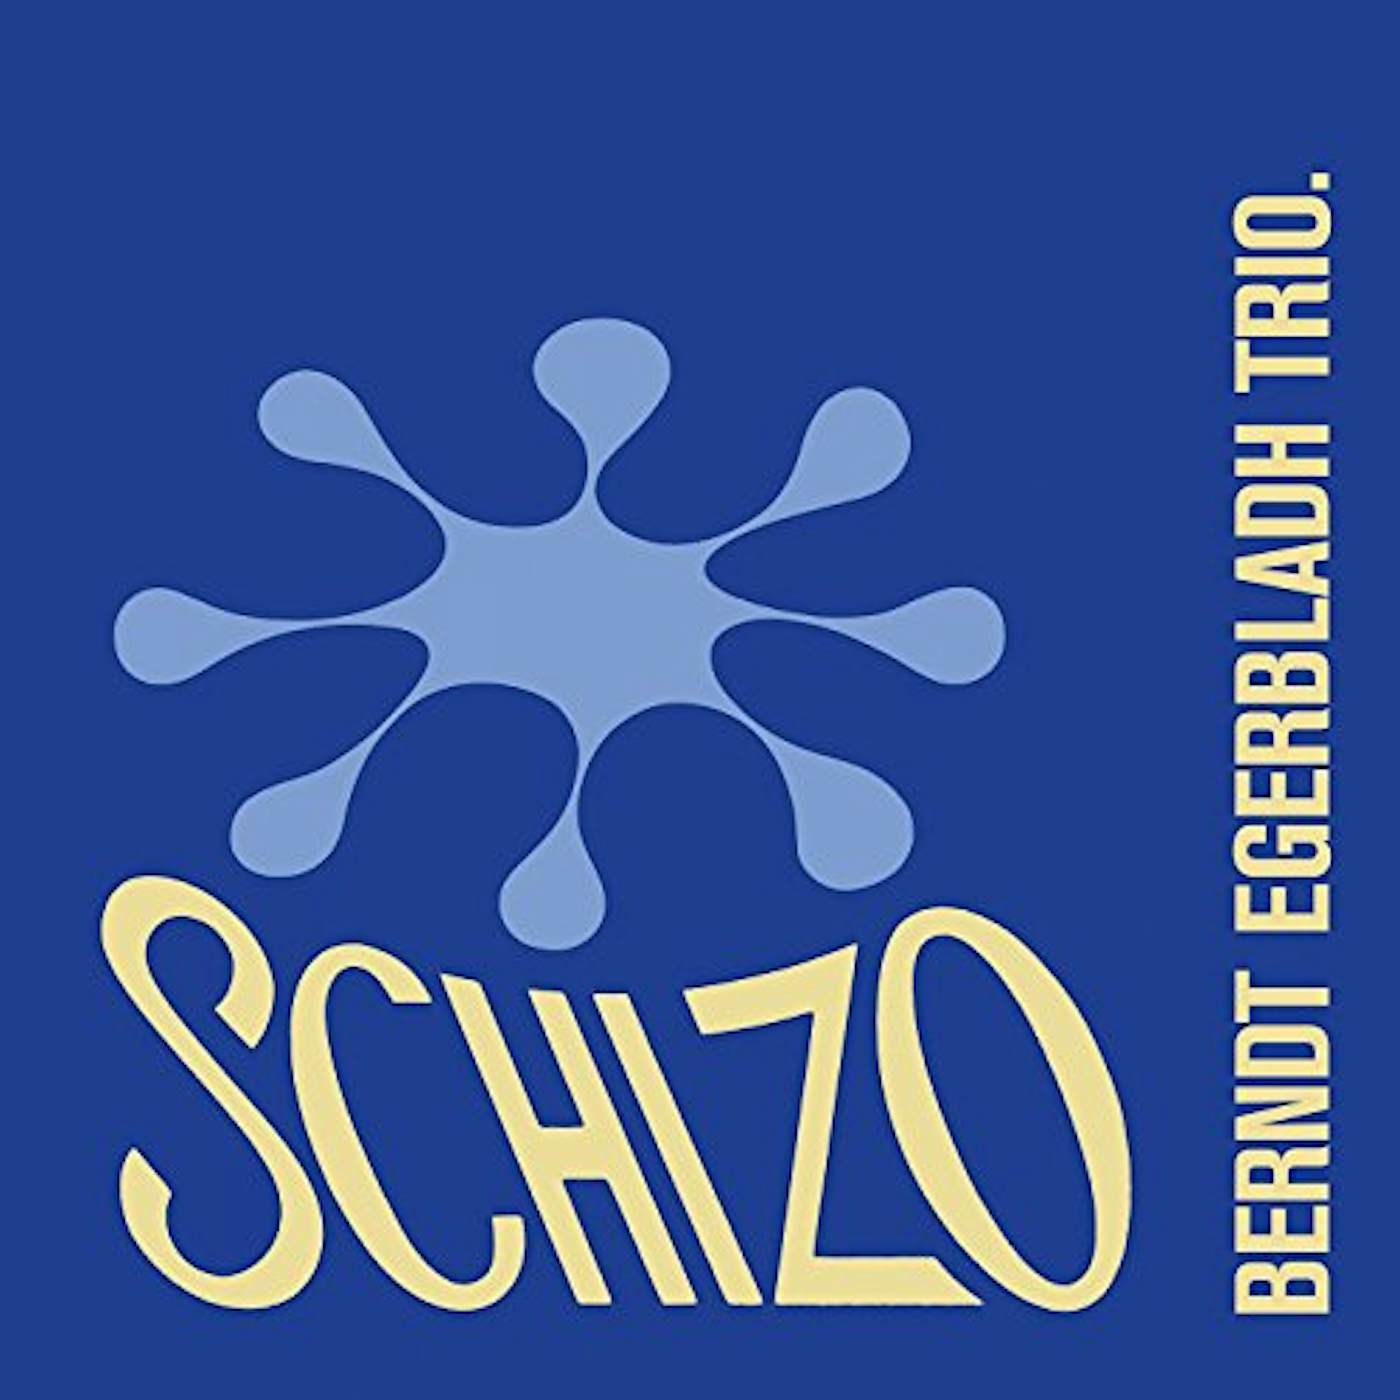 Berndt Egerbladh Trio Schizo Vinyl Record